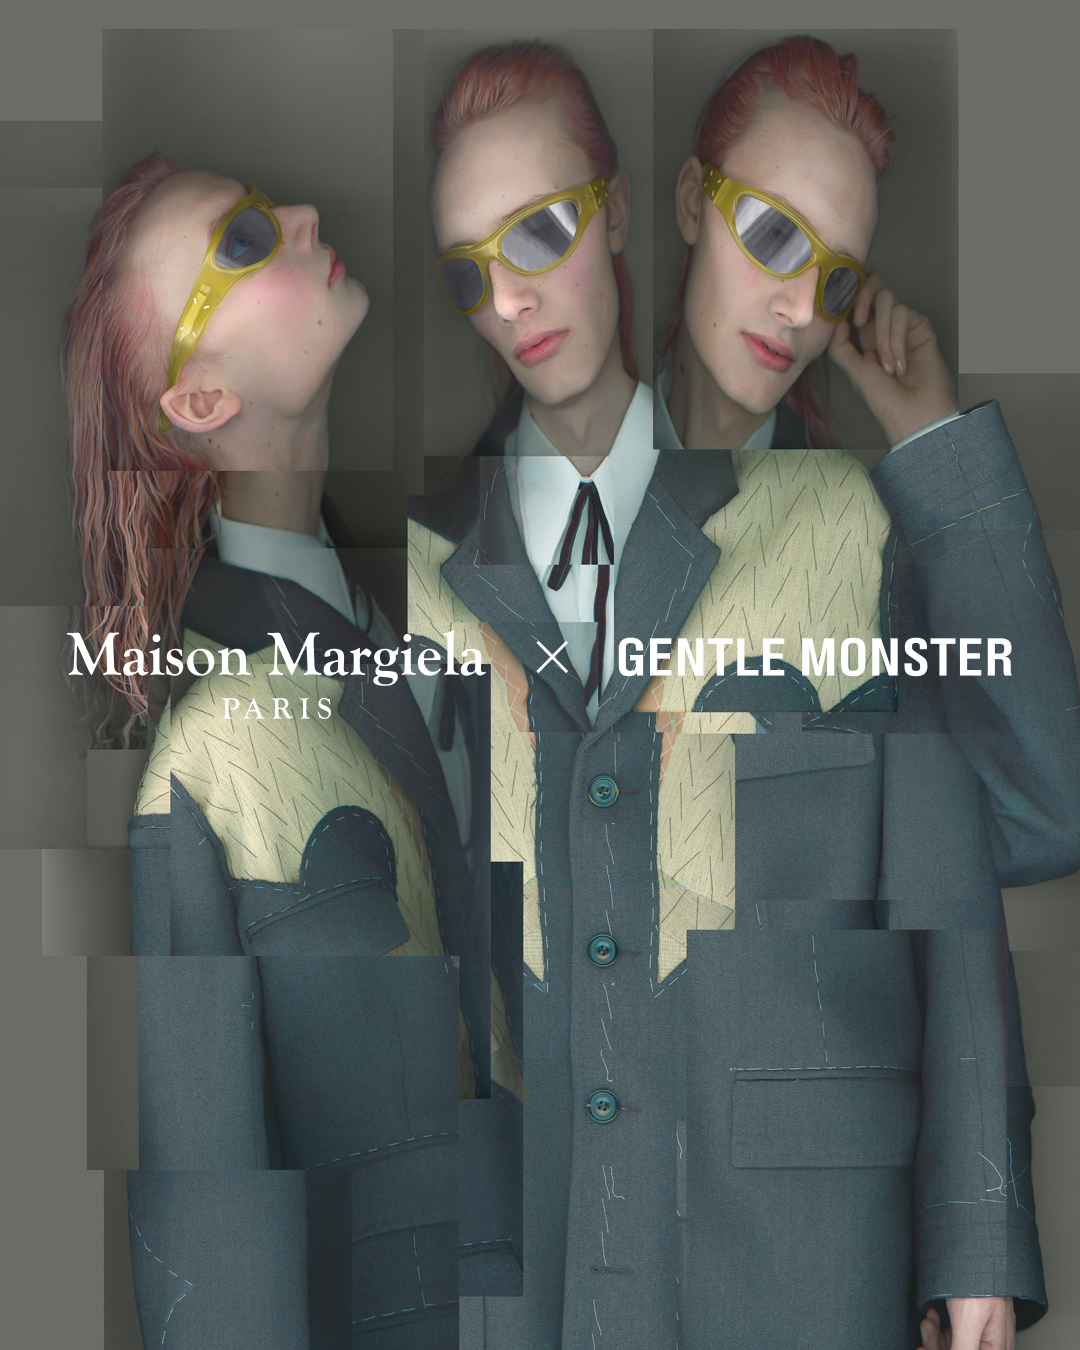 Maison Margiela partners with iconic eyewear maker Gentle Monster on eleven new original designs